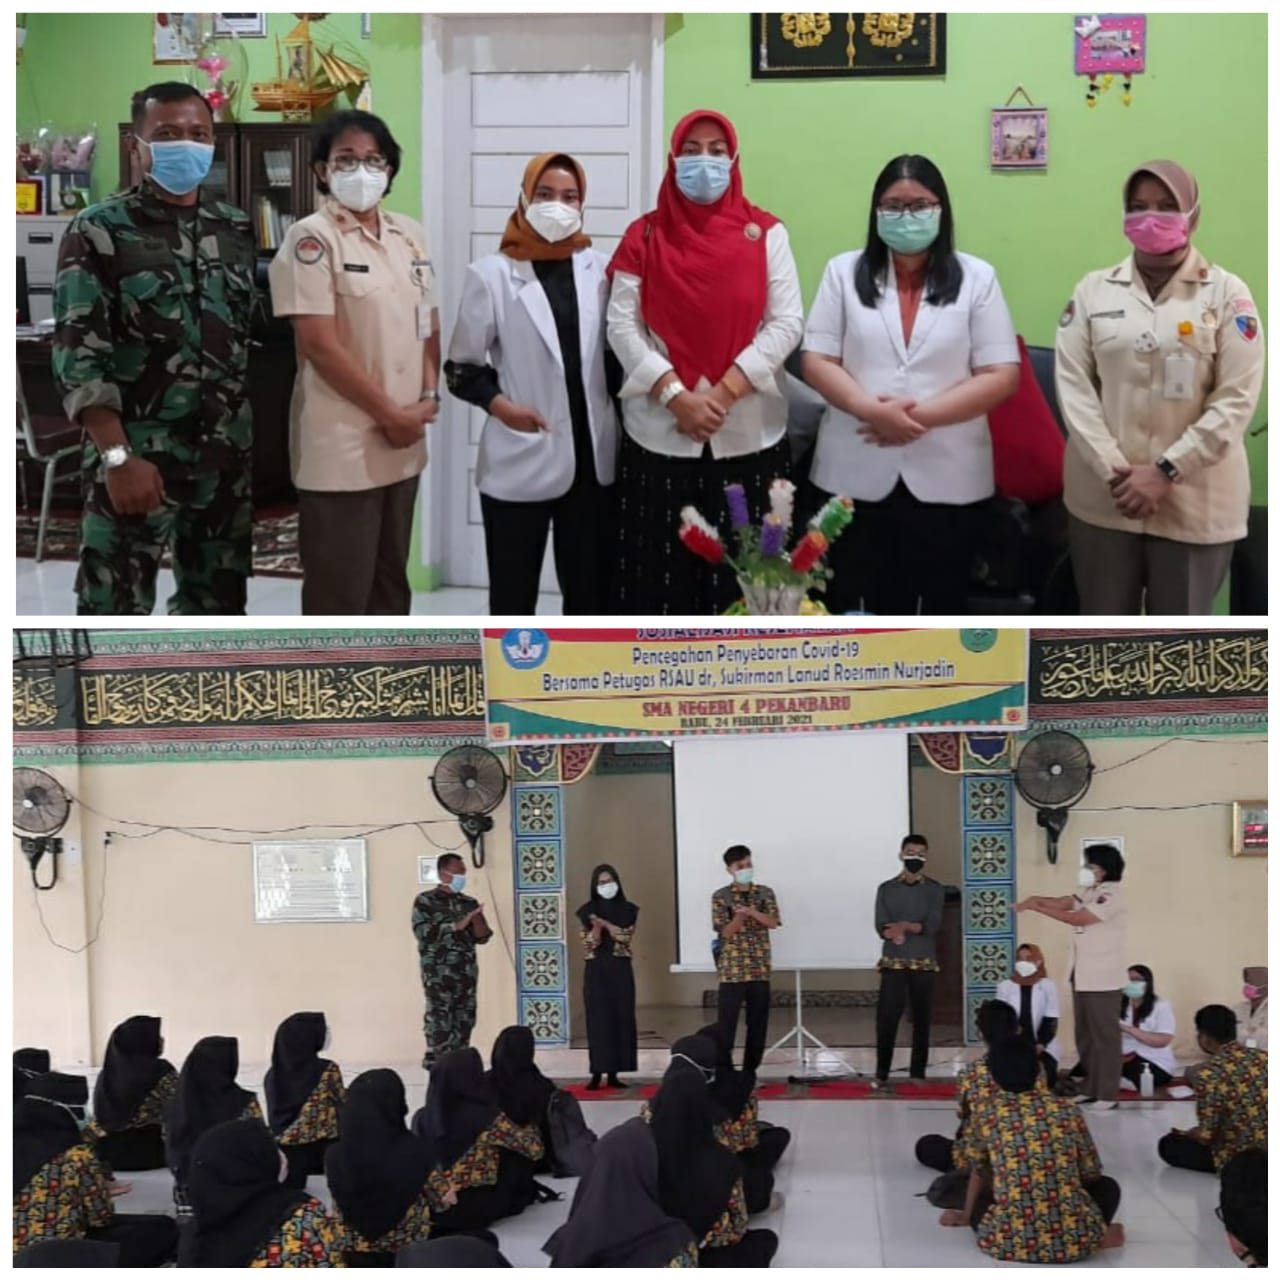 Siswa SMAN 4 Pekanbaru Dapat Sosialisasi Kesehatan dari RSAU dr Sukirman Lanud Roesmin Nurjadin 